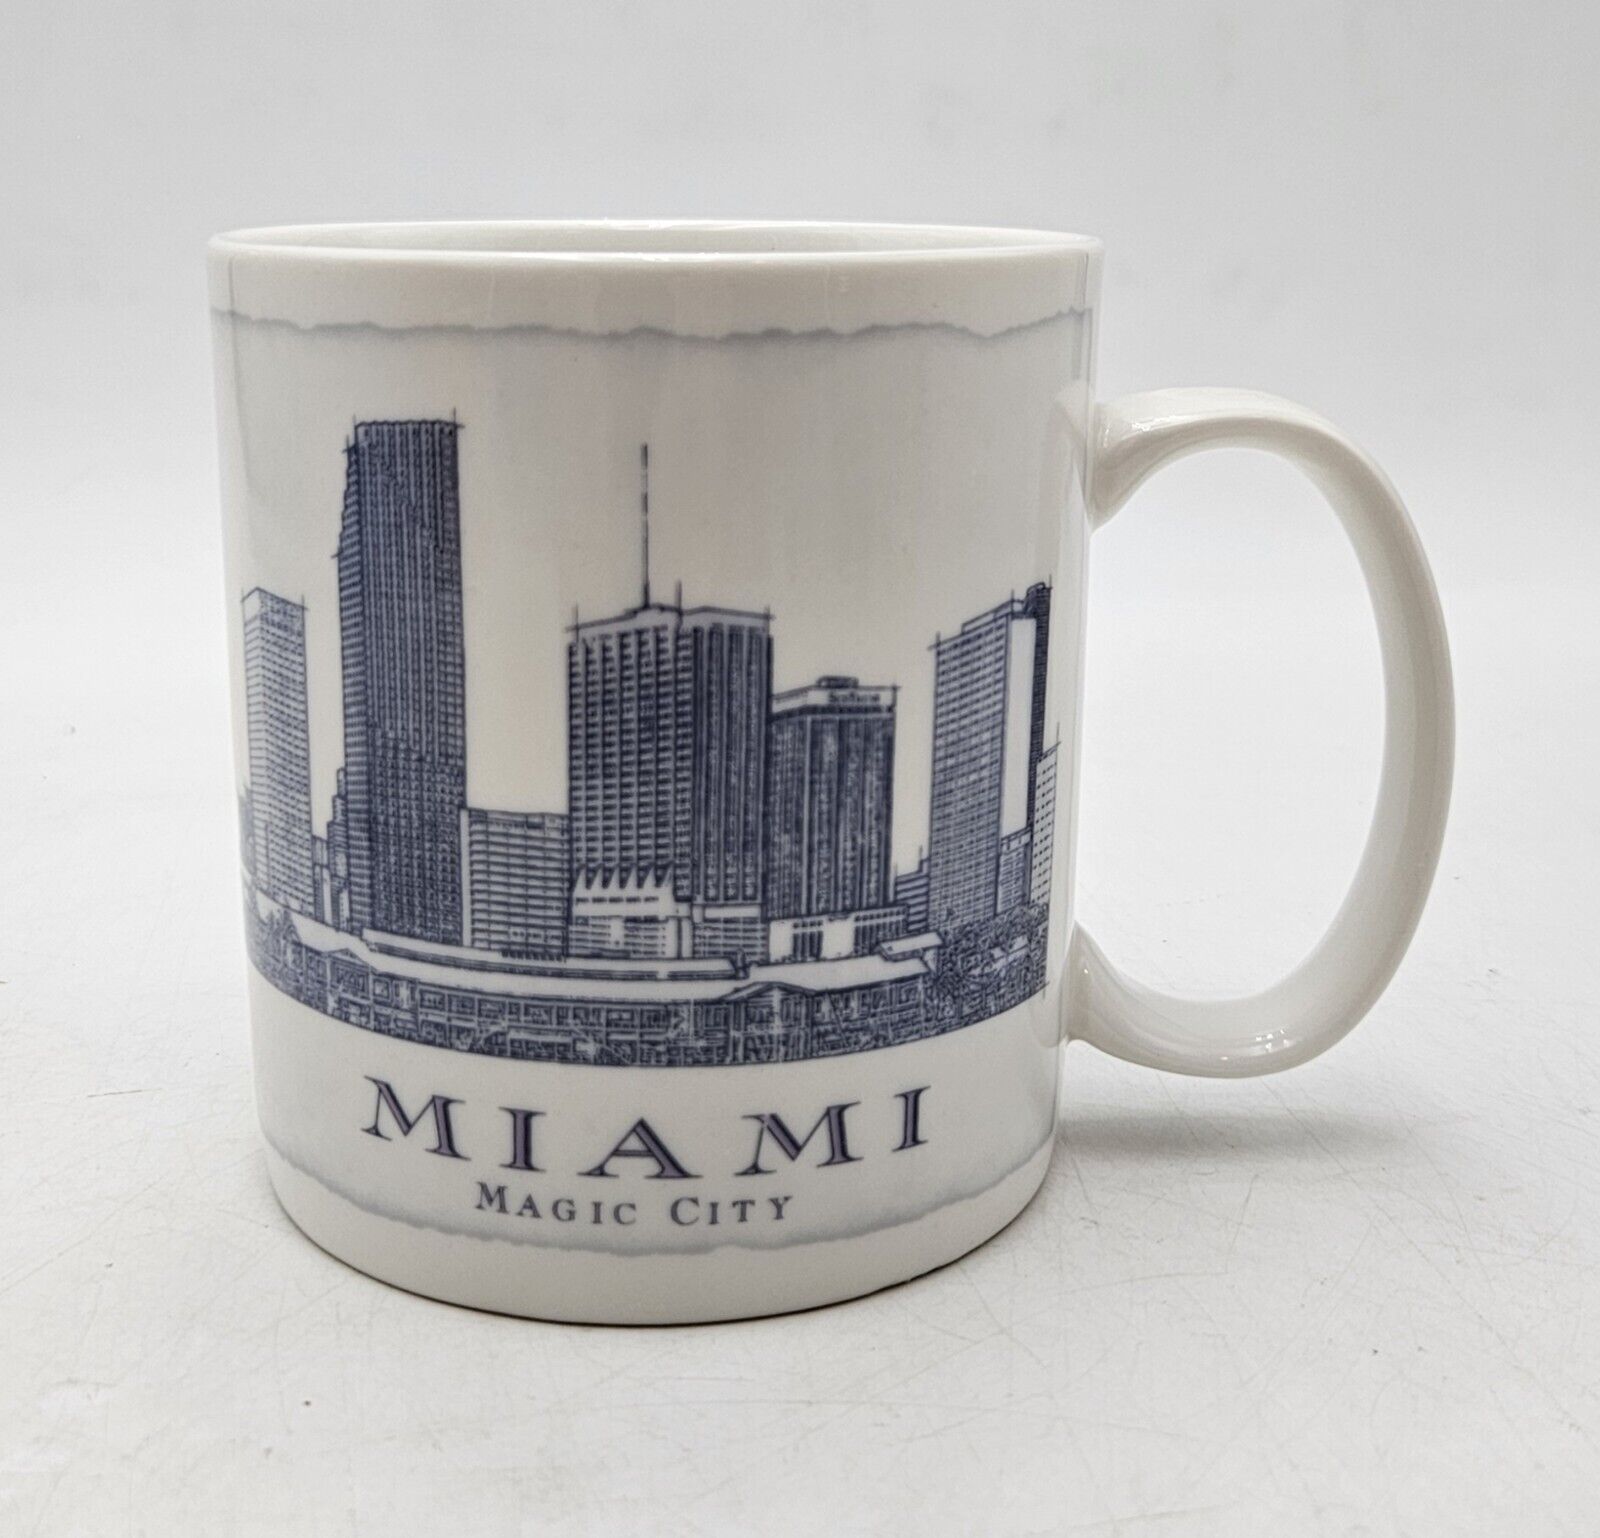 Starbucks Coffee Mug Miami Magic City 18 Oz 2007 Architecture Series Tea